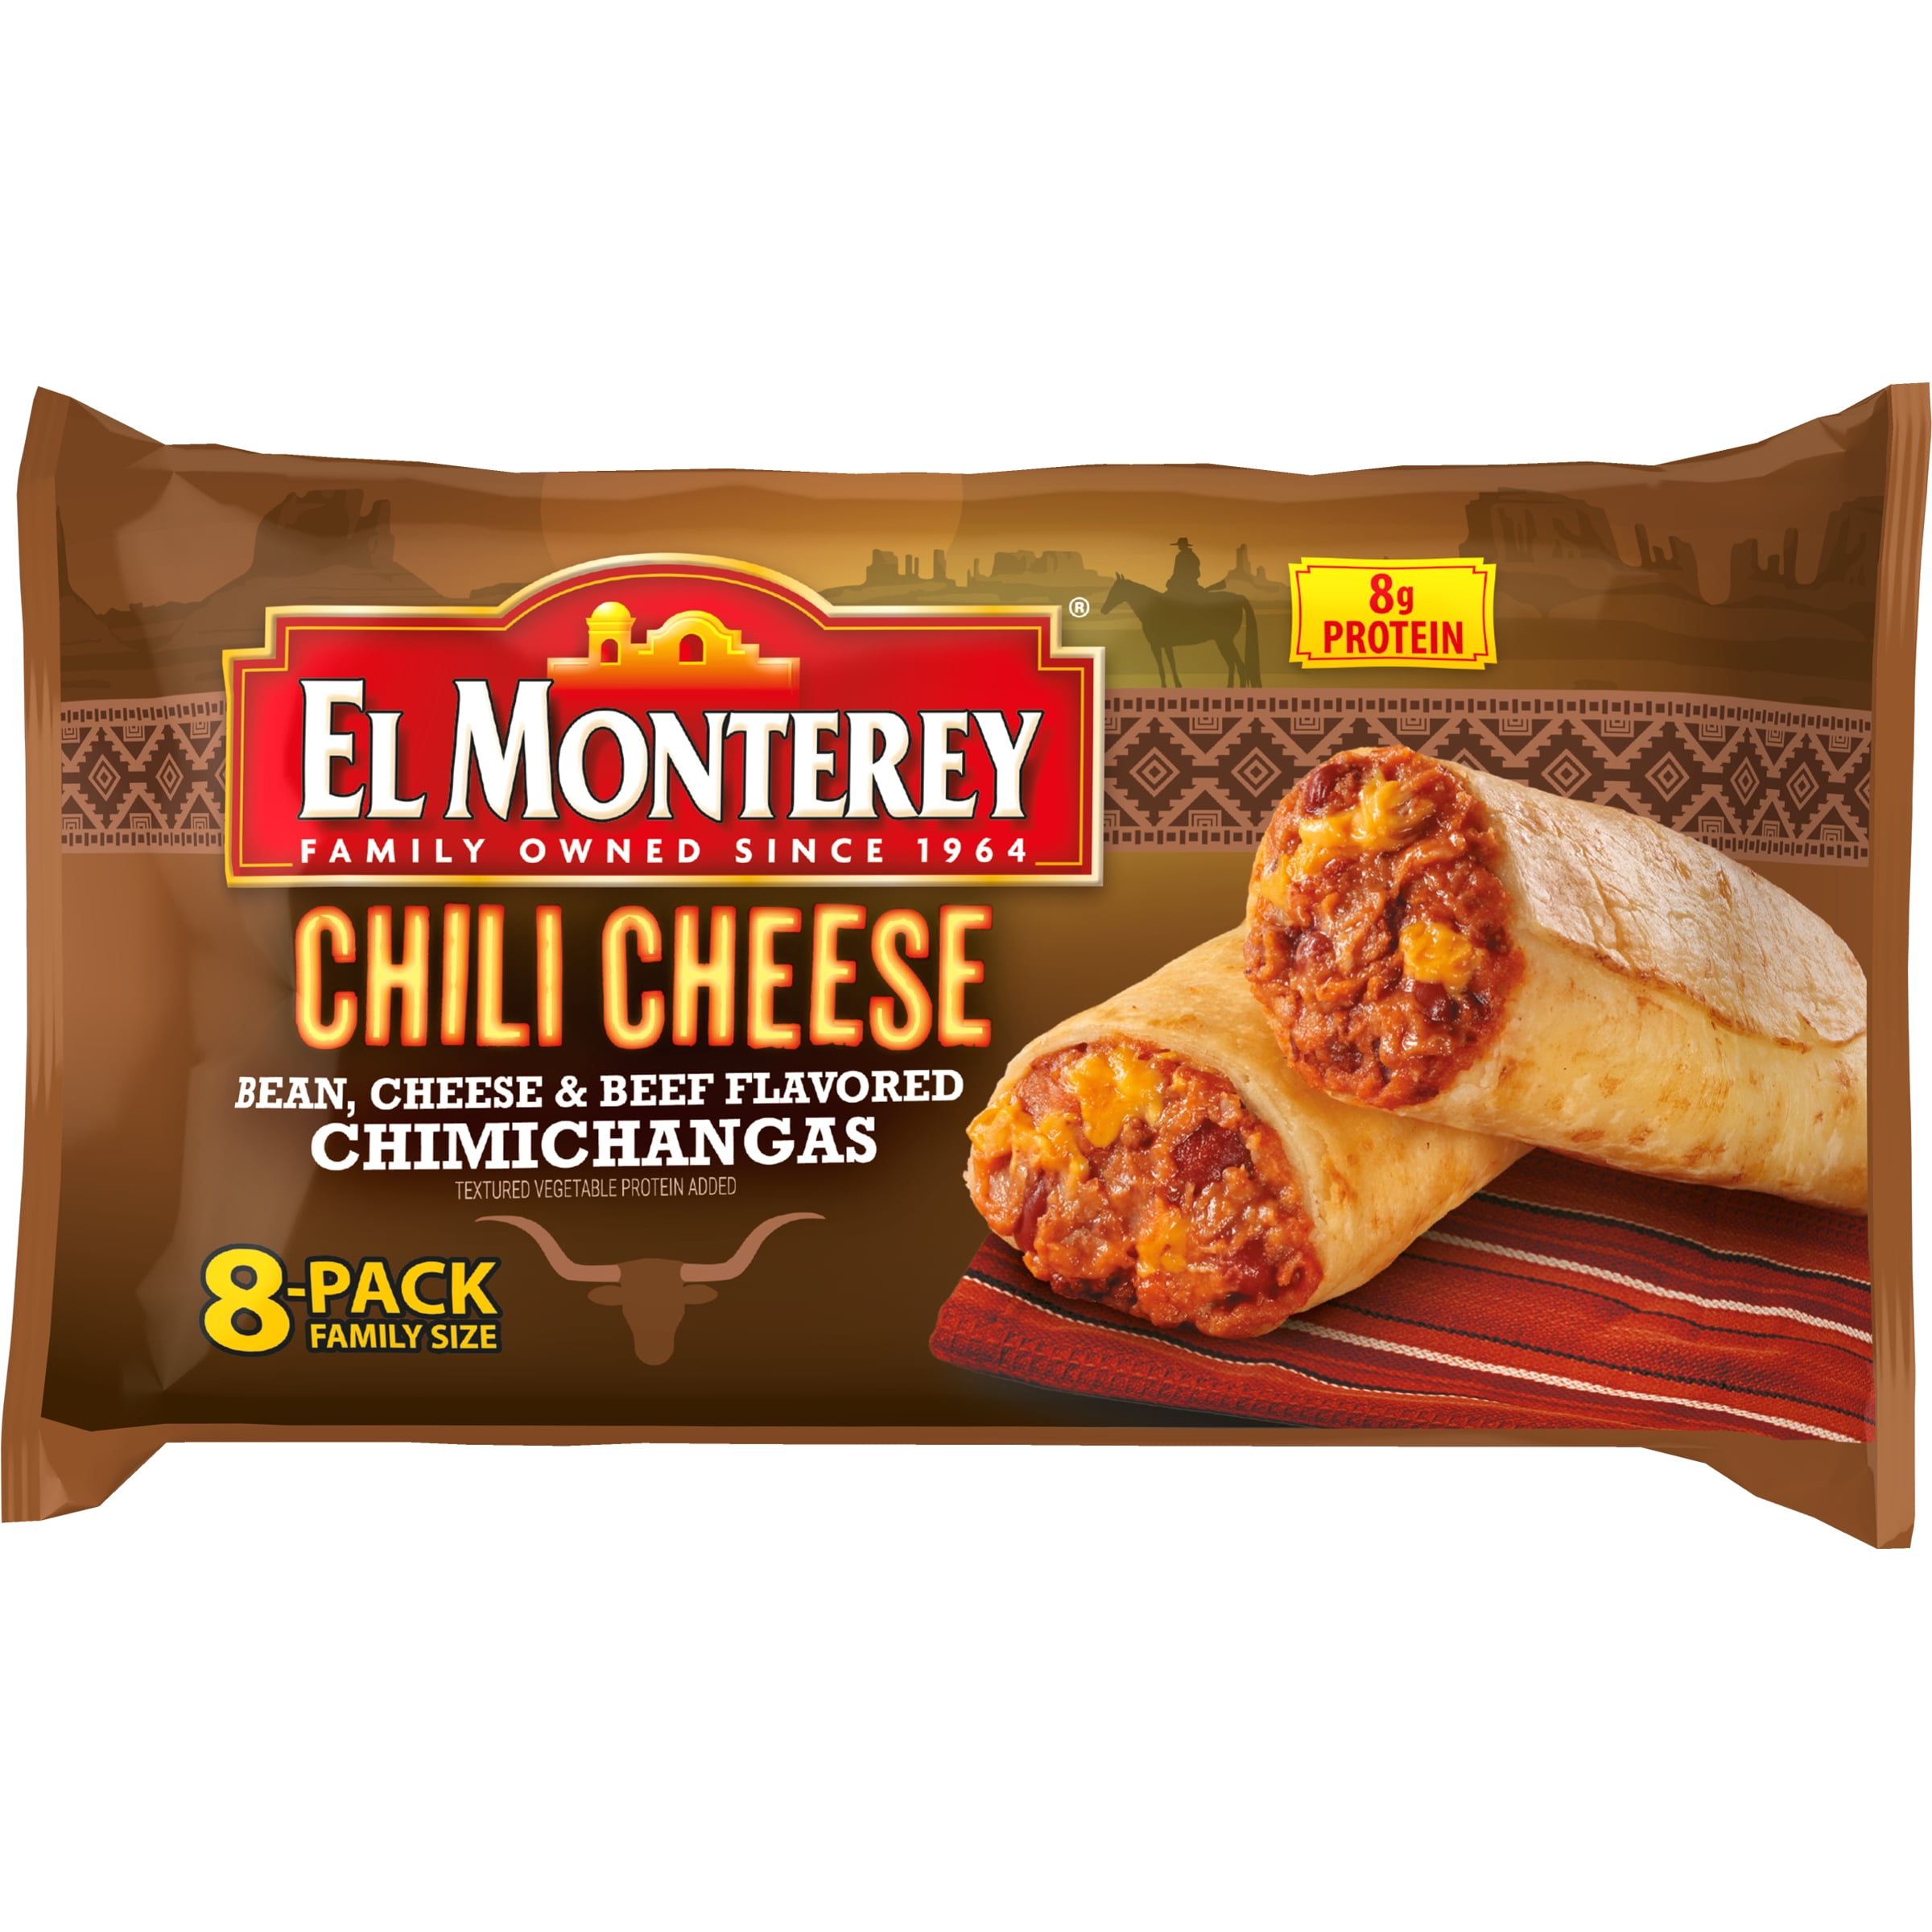 El Monterey chimichangas, chicken & cheese mini chimis, monterey18-oz -  MORE - Snack, Appetizer - Frozen - Shop By Aisle